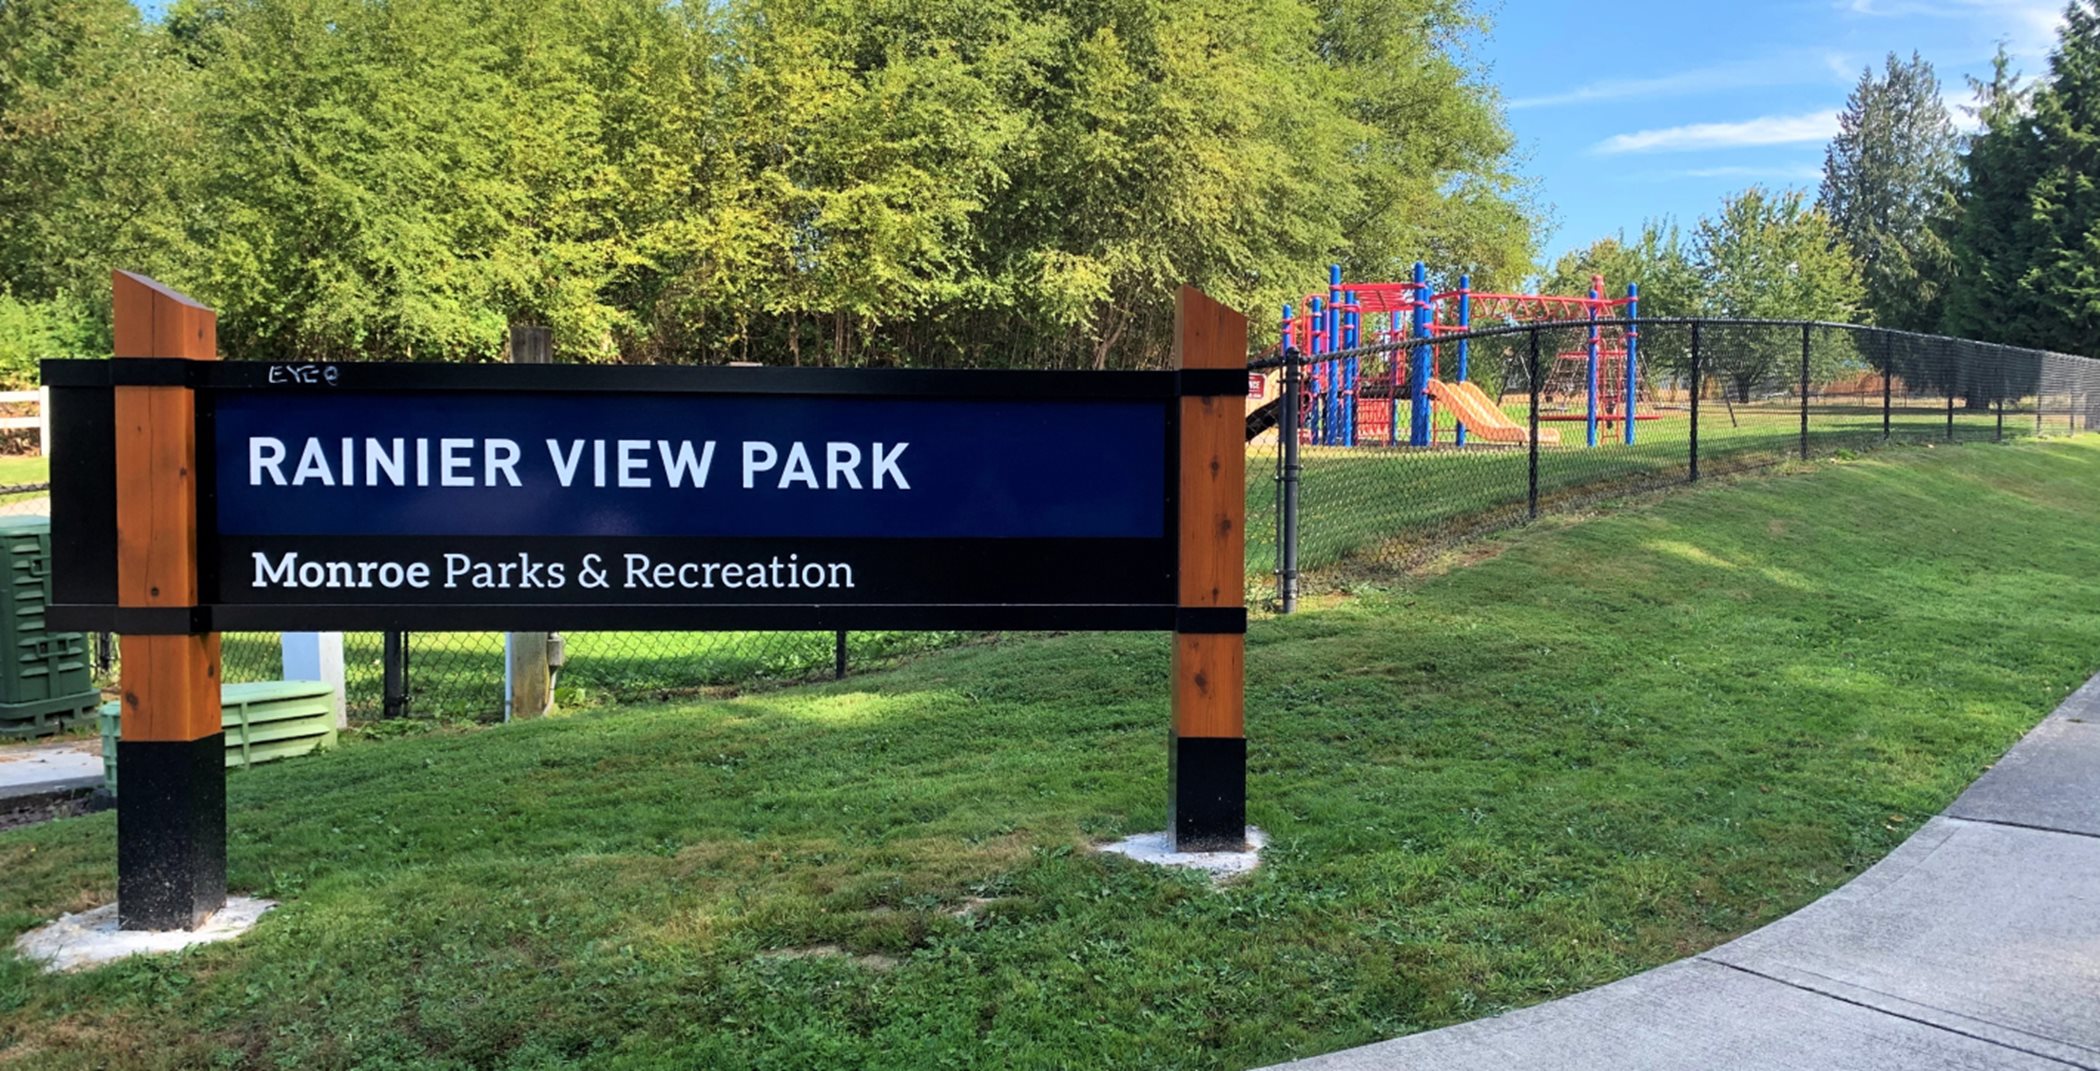 Rainier View Park welcome sign